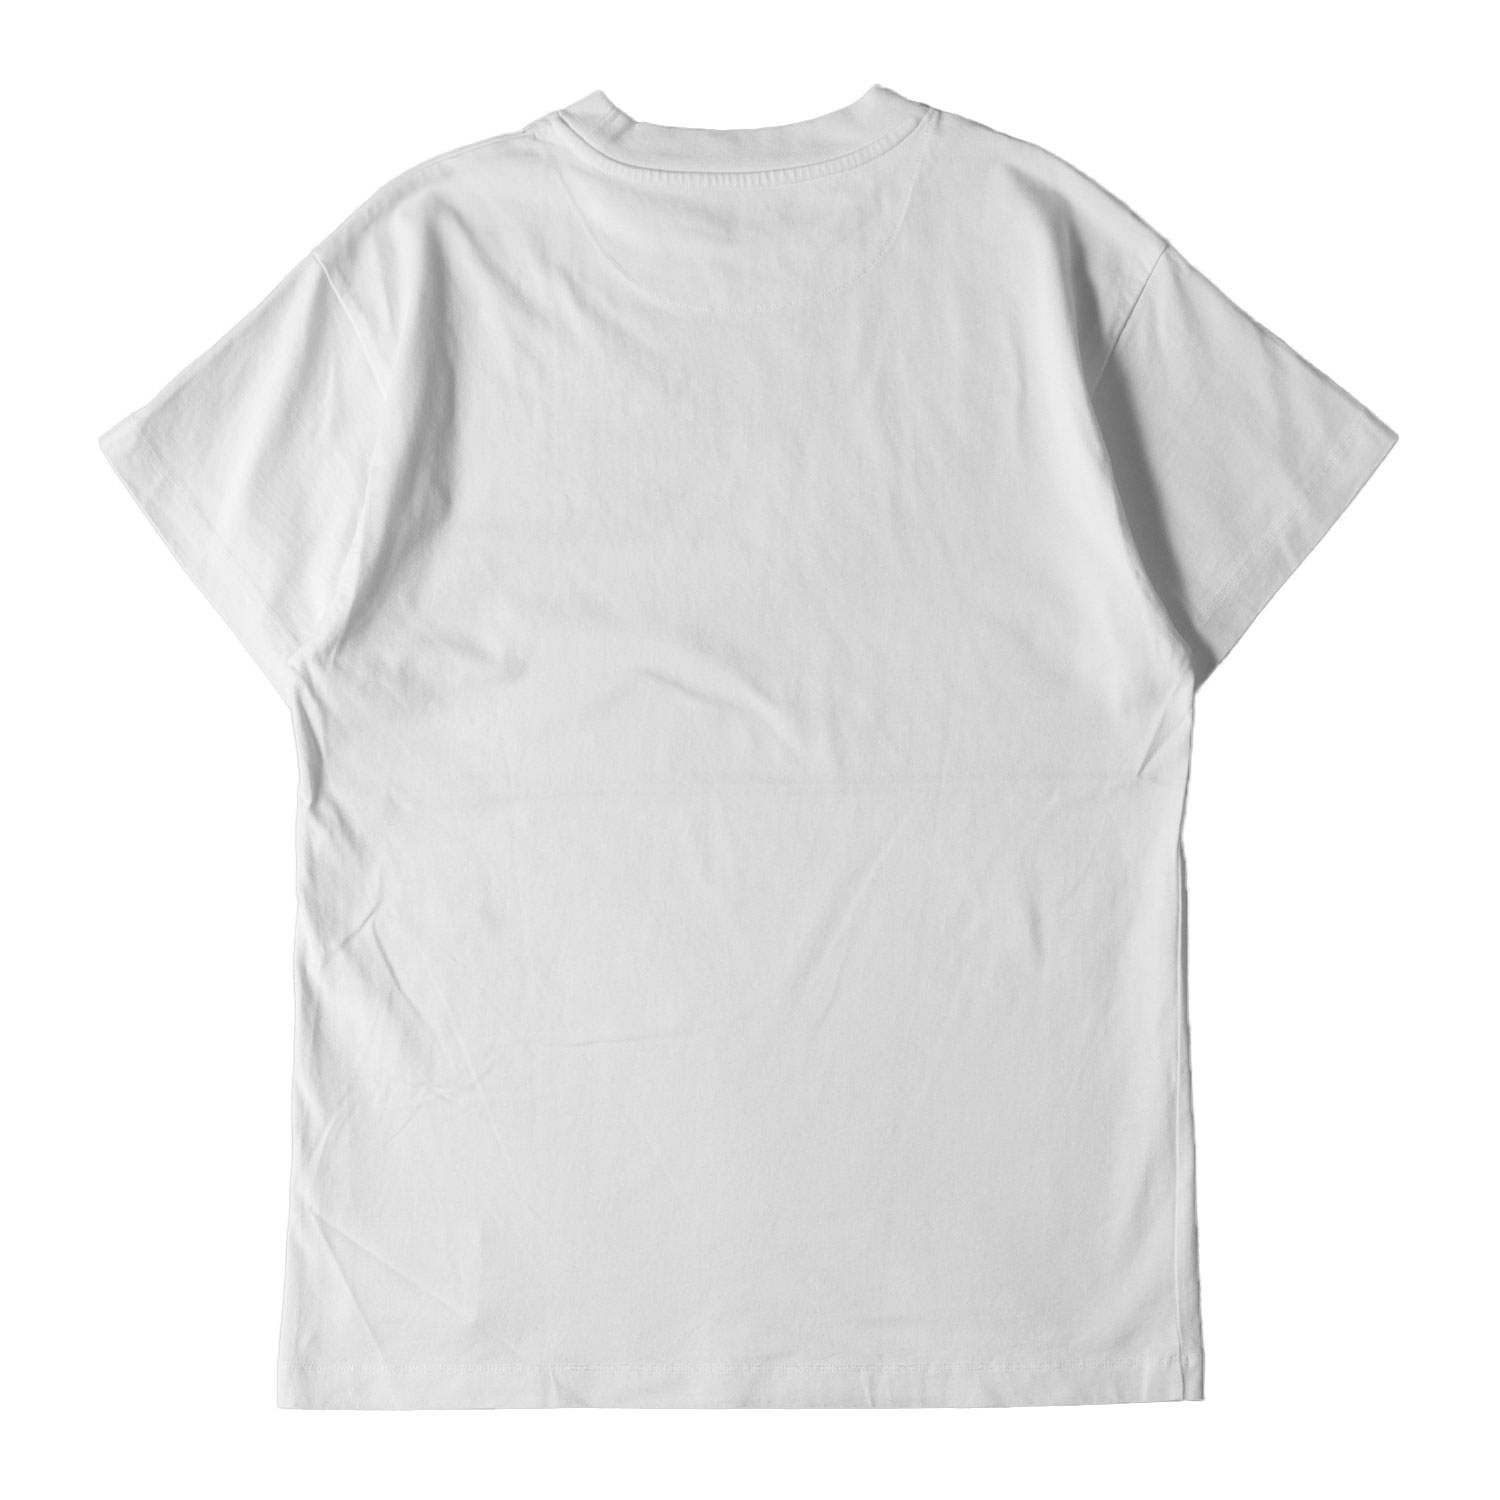 JIL SANDER ジル・サンダー Tシャツ サイズ:S 裾 ロゴ パッチ プレーン クルーネック 半袖 Tシャツ JPUP706530  MQ248808 プラス ホワイト 白 トップス カットソー 無地 ブランド シンプル - メルカリ